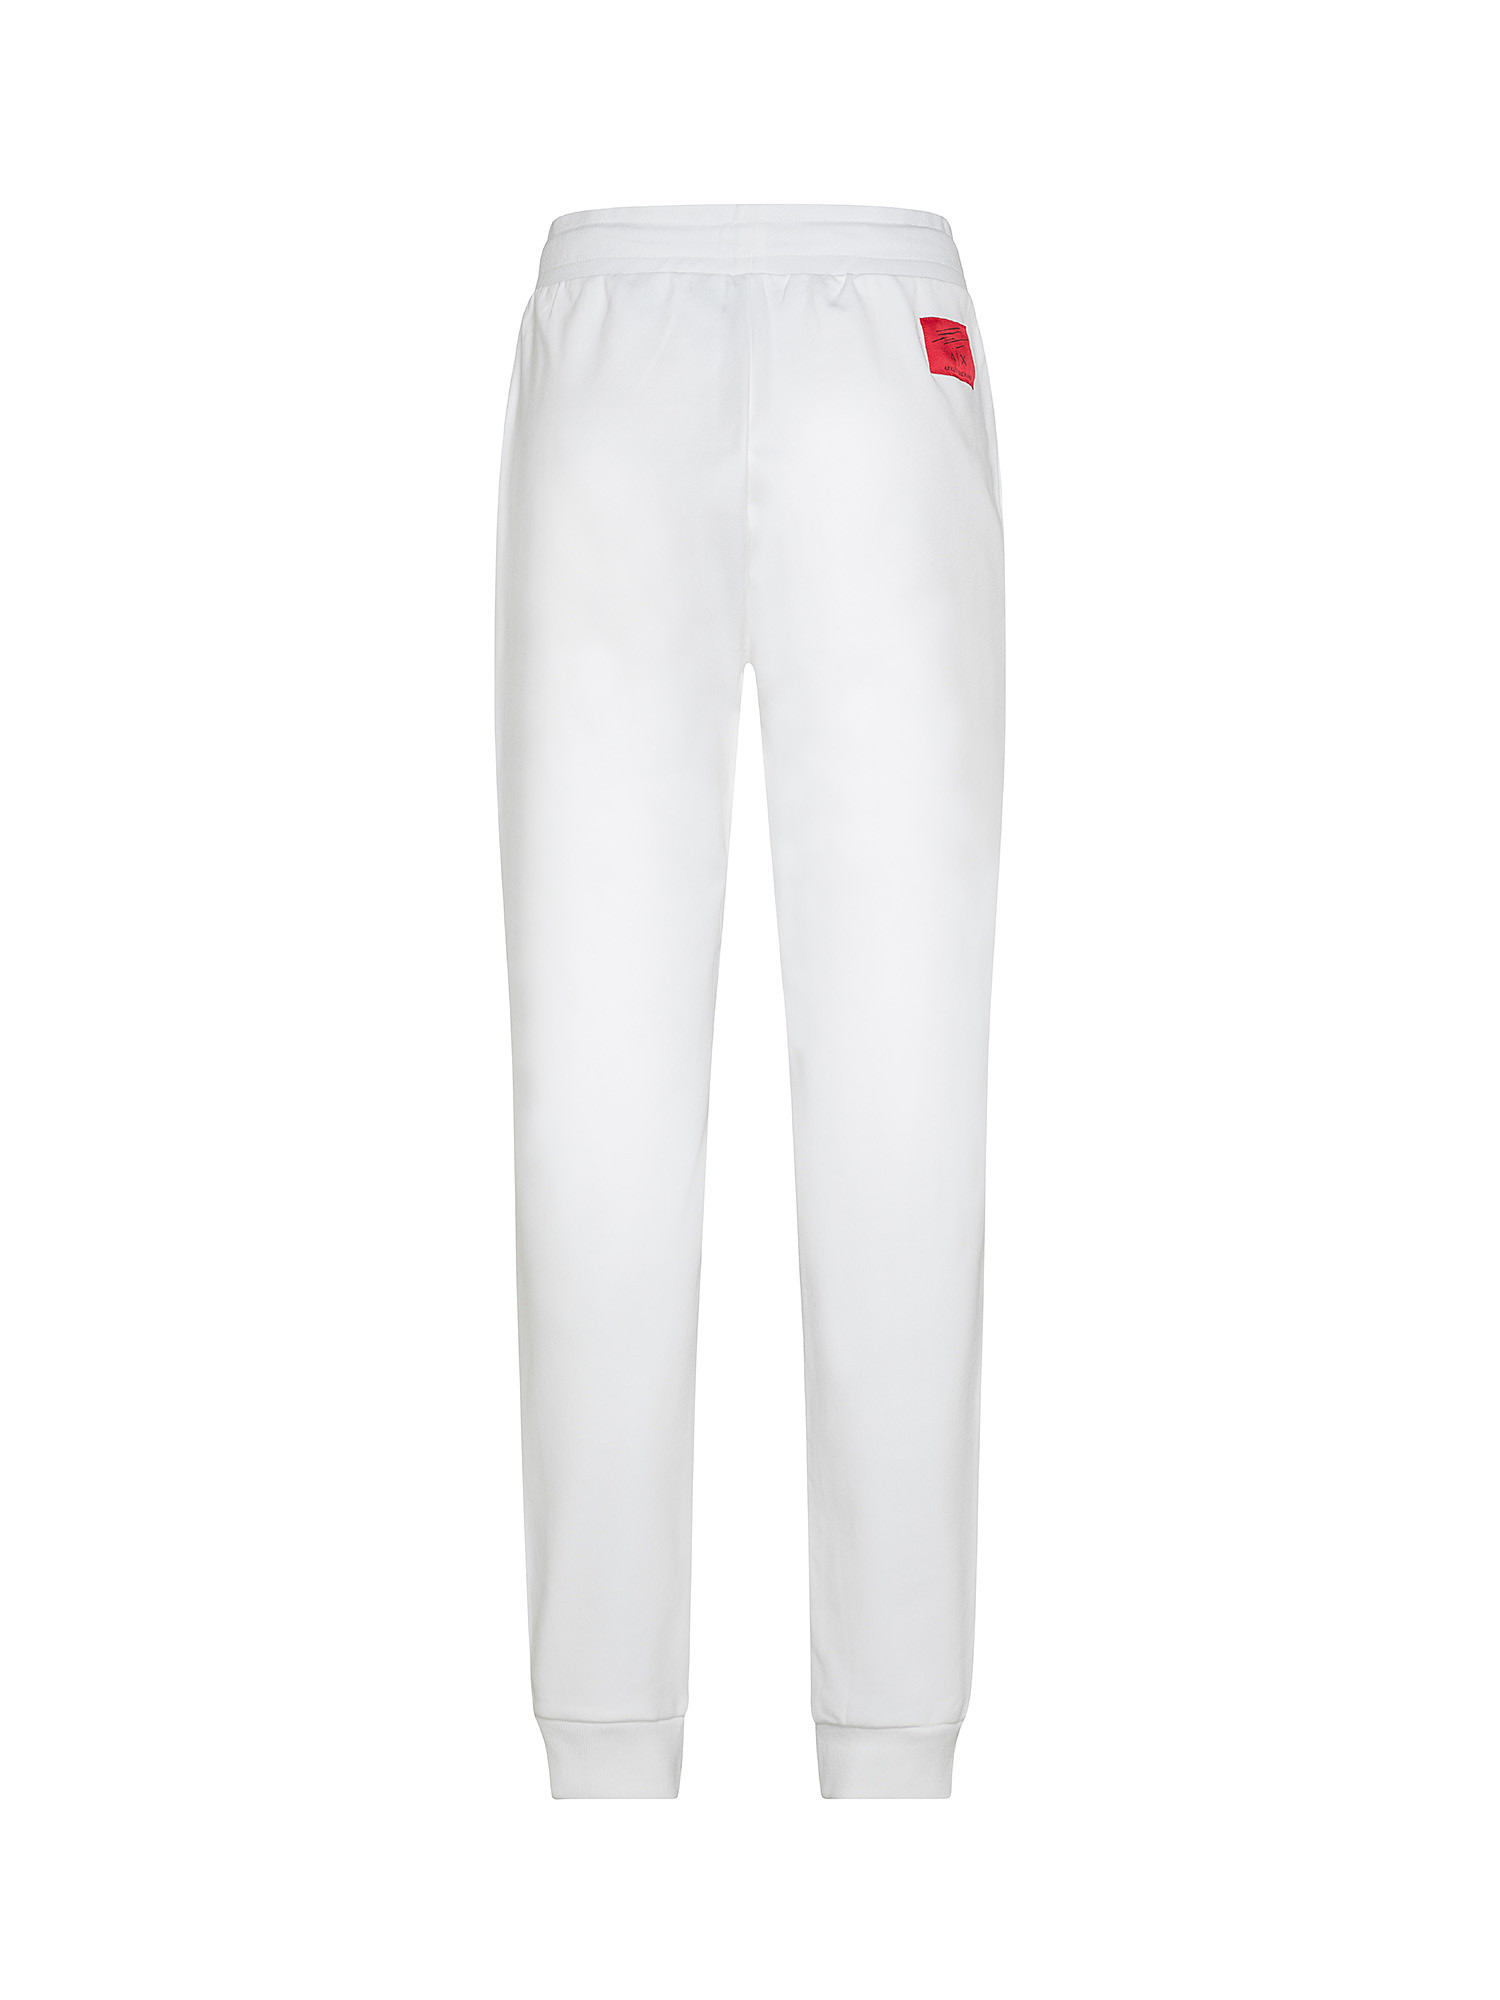 Pantalone da jogging, Bianco, large image number 1